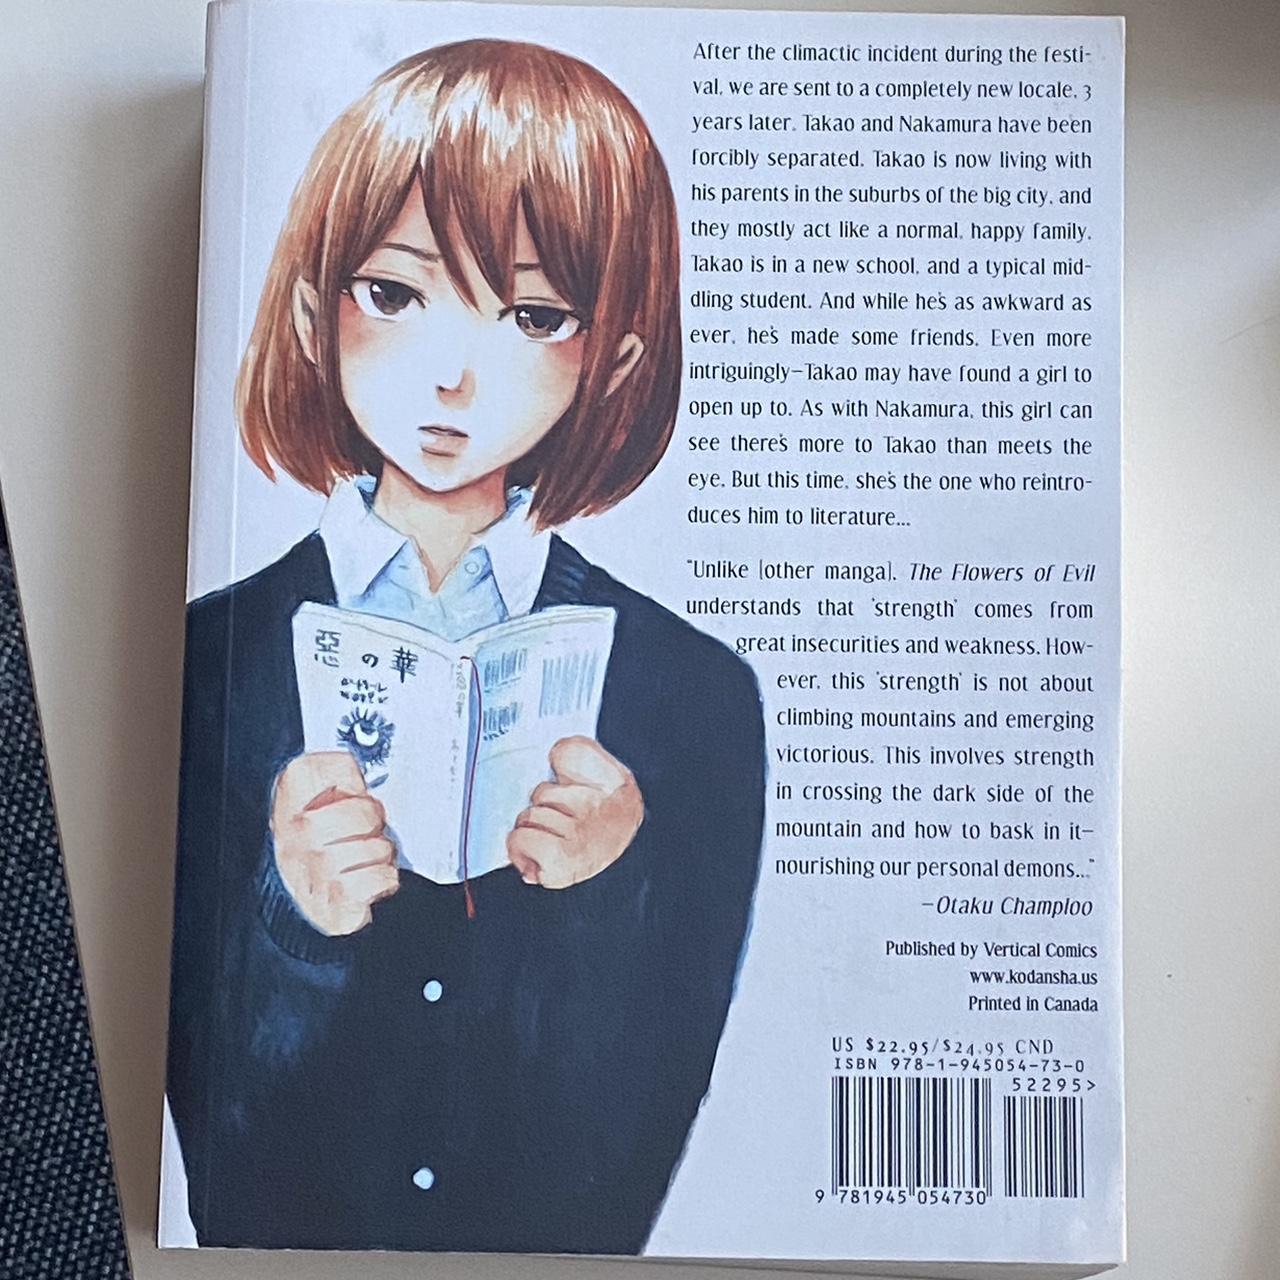 Manga 'Aku no Hana' to End Next Month 